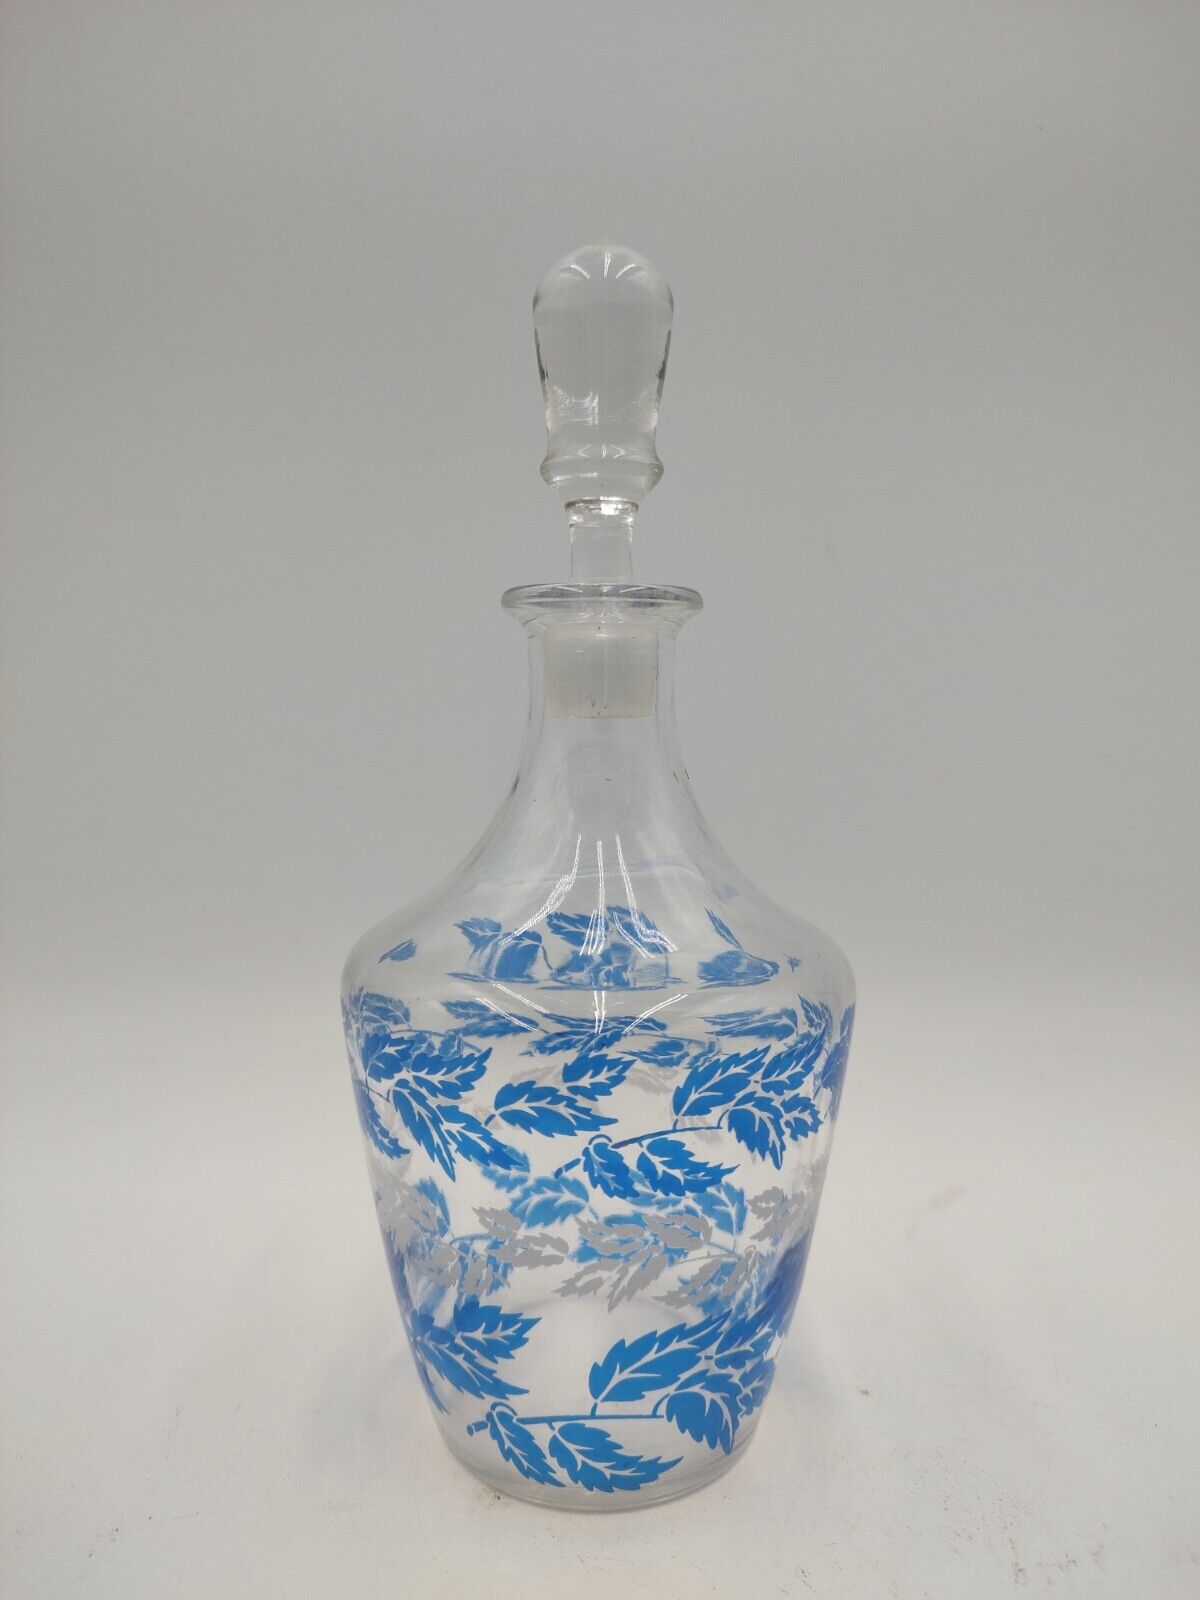 Vintage Luminarc France Glass Decanter Blue Floral Pattern Clear Stopper